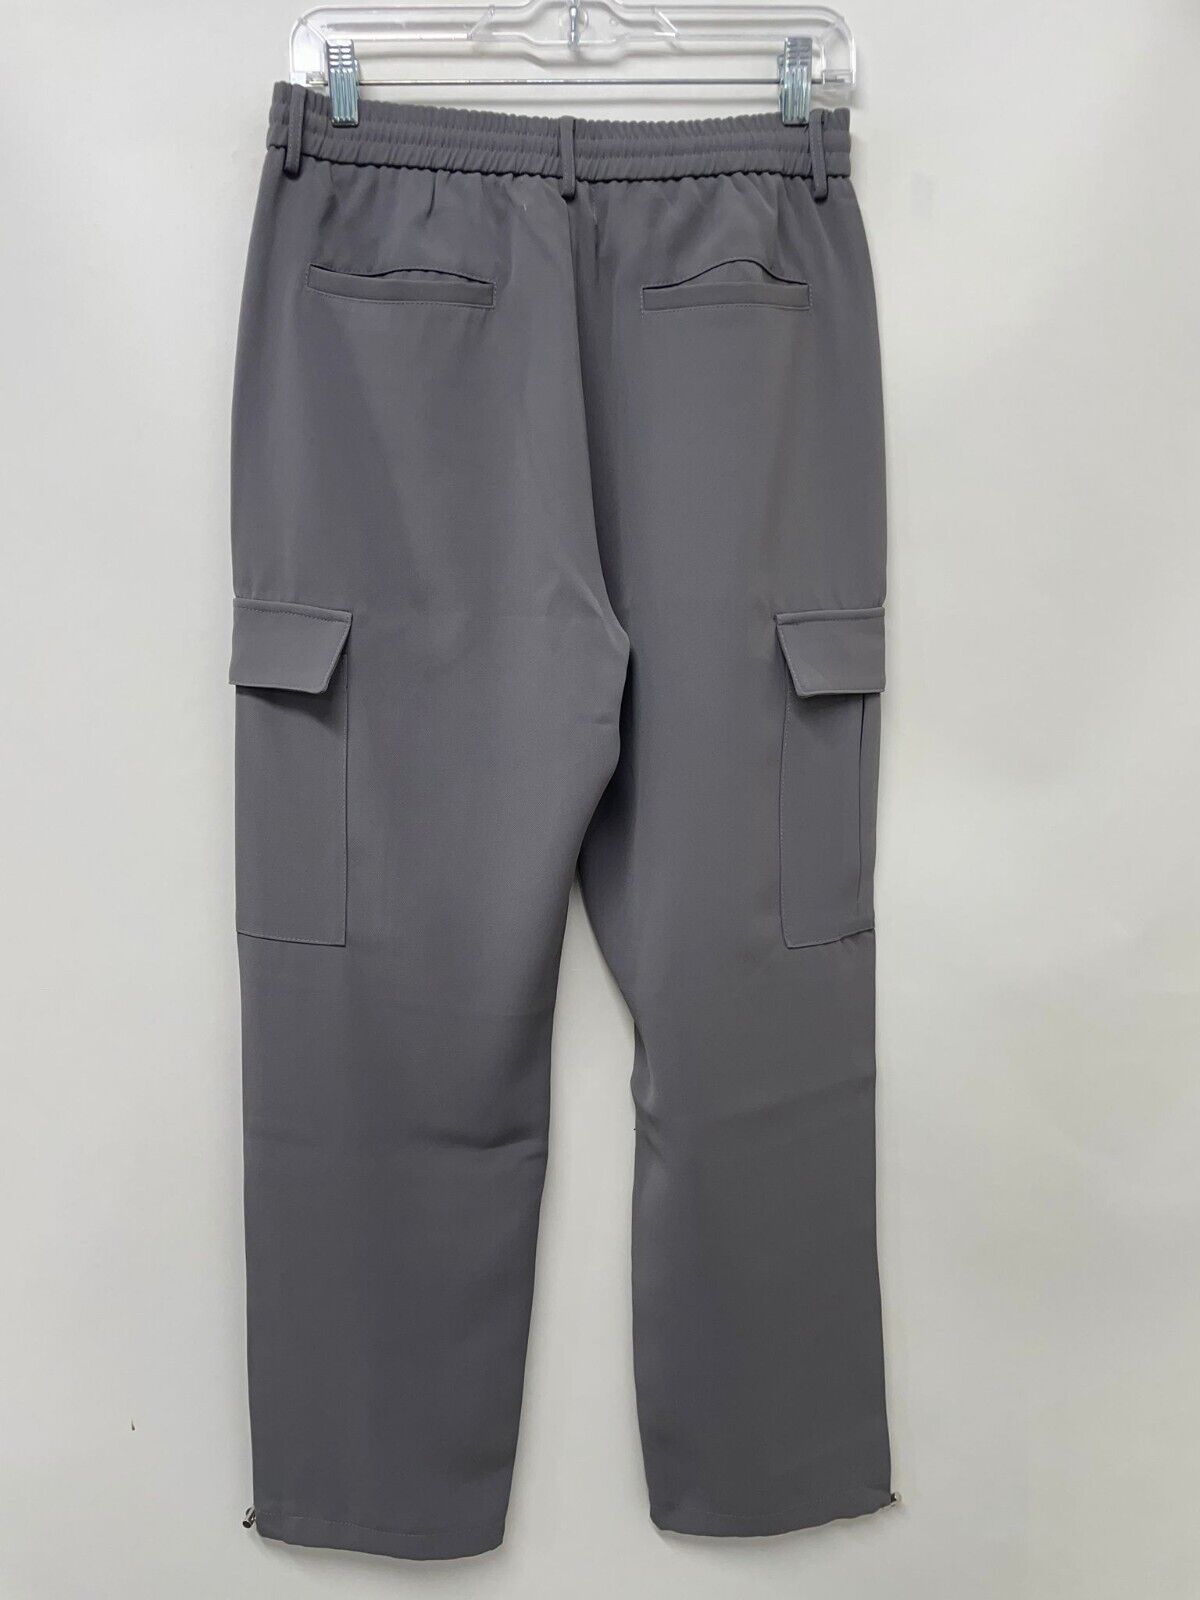 XXAN Studios Mens M Tokyo A:M Cargo 2.0 Pants Gray Asian Streetwear Pockets